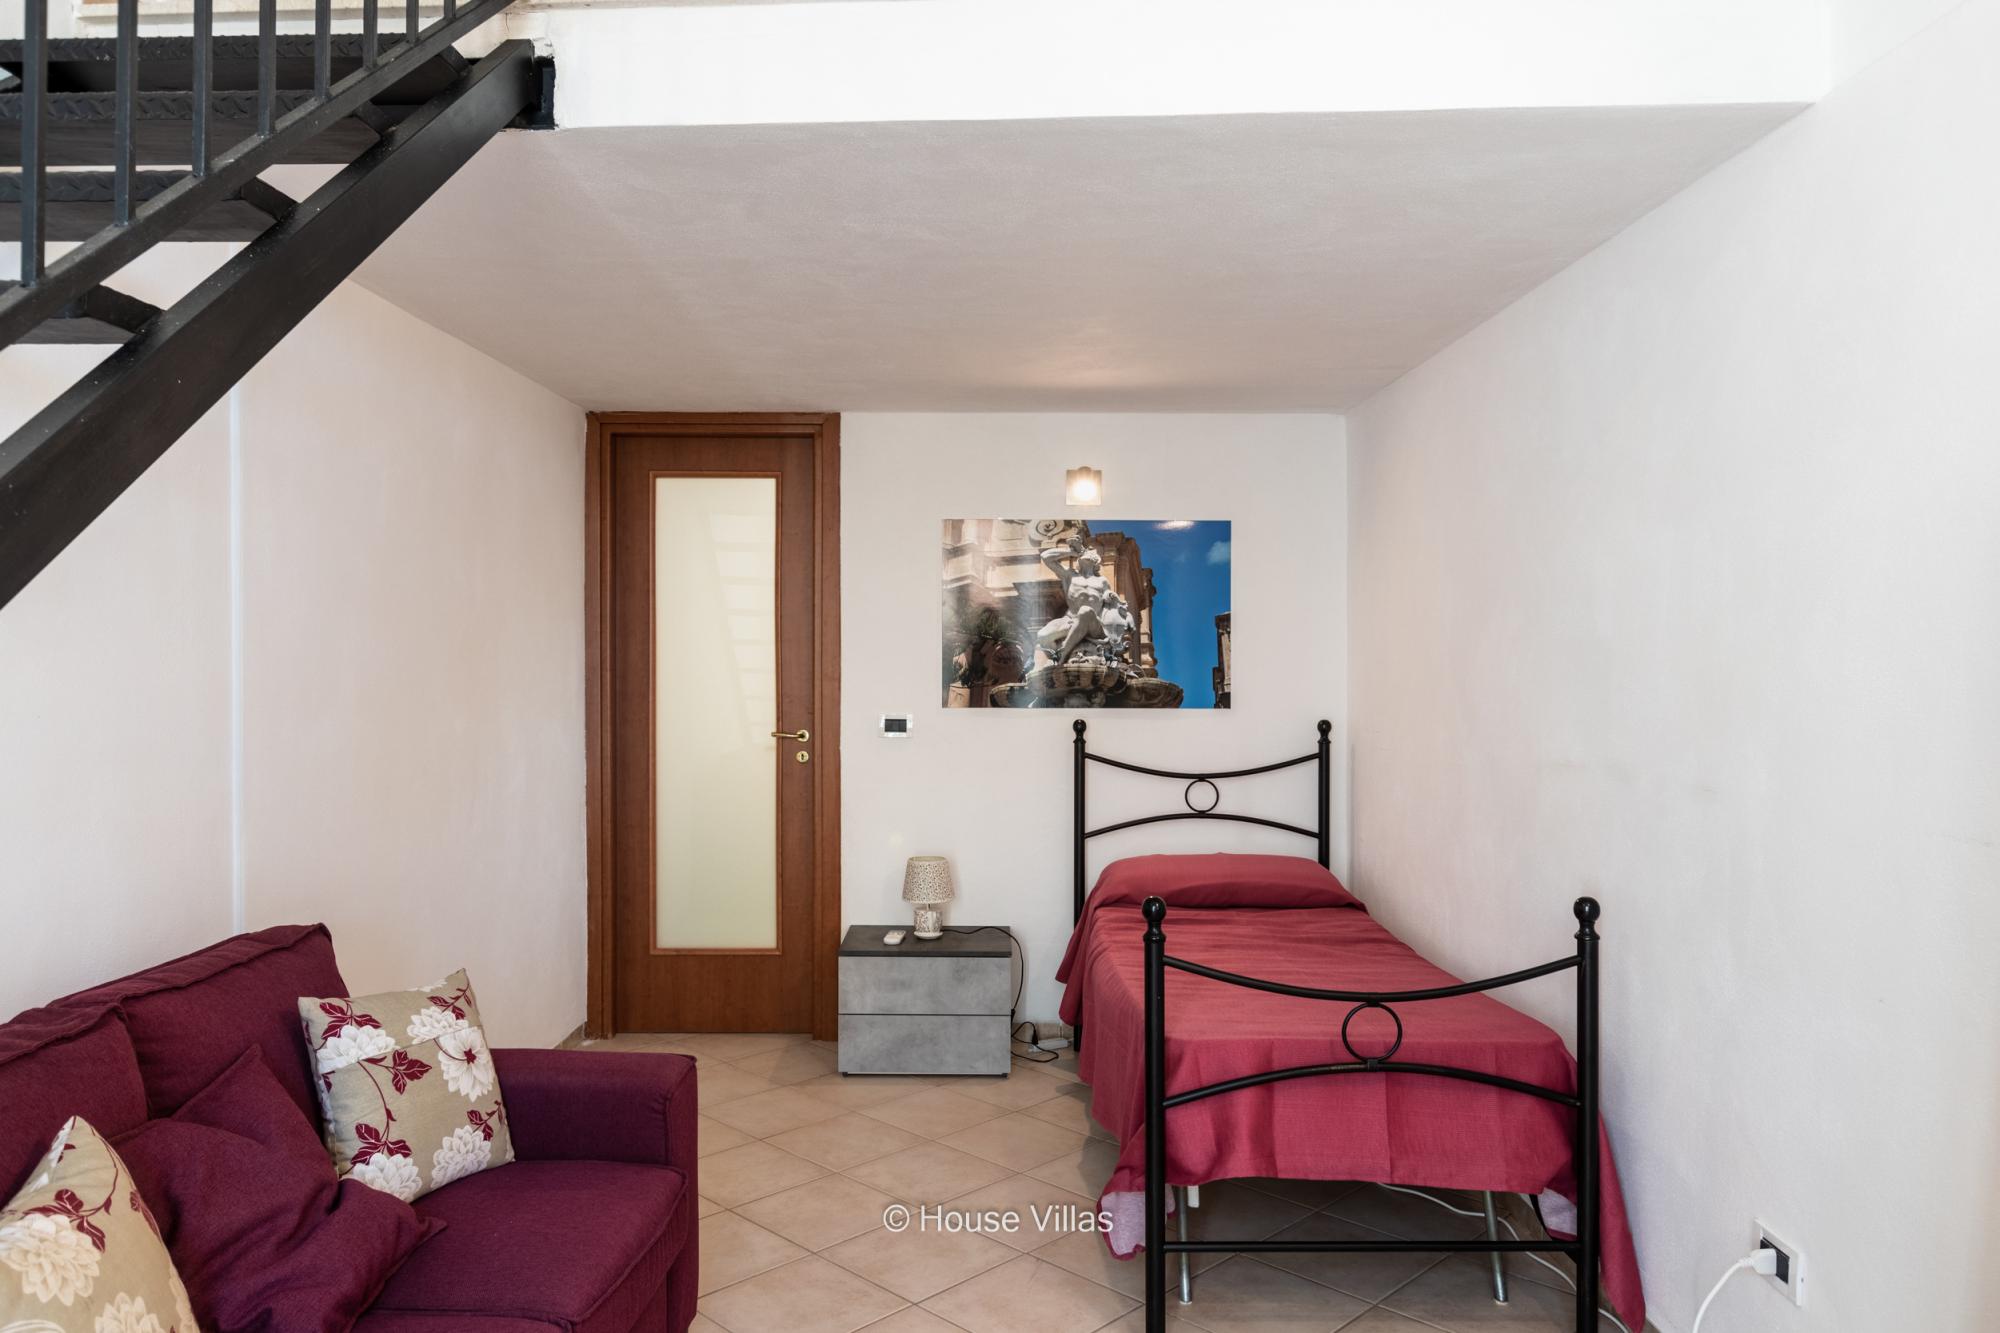 Property Image 1 - Ciuri Ciuri in Noto with 3 bedrooms and 2 bathrooms